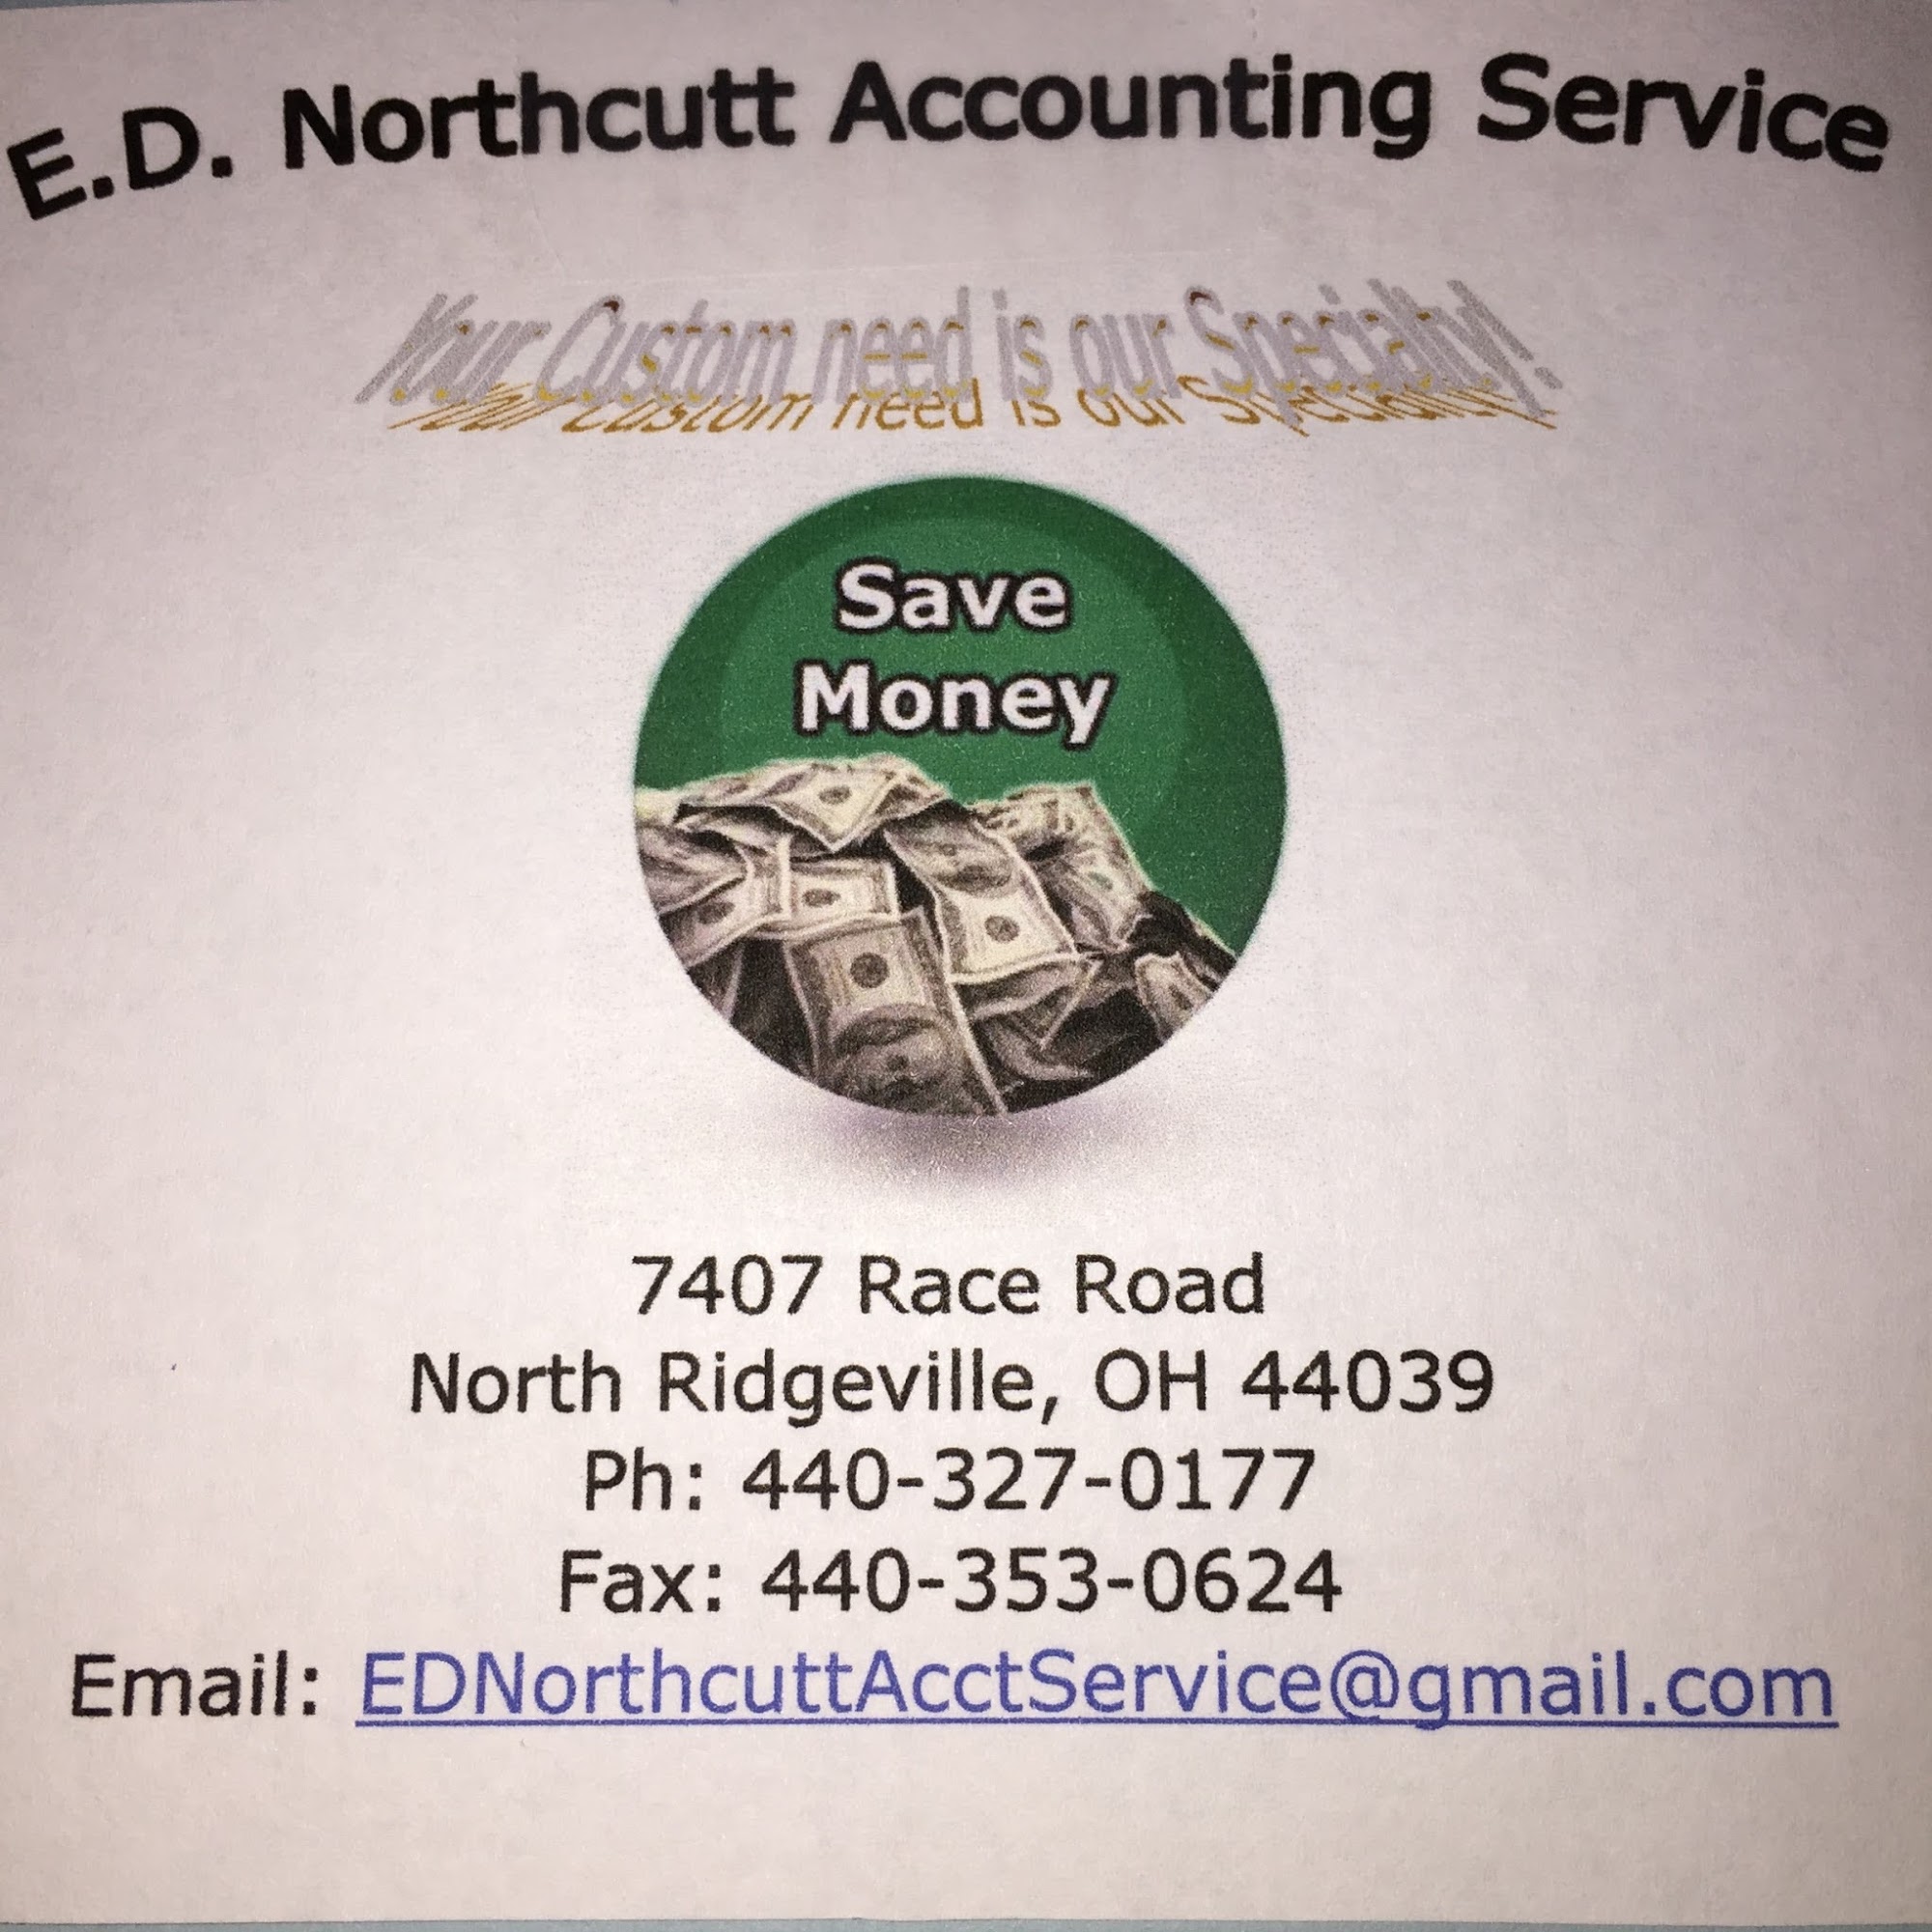 E.D. Northcutt Accounting Service